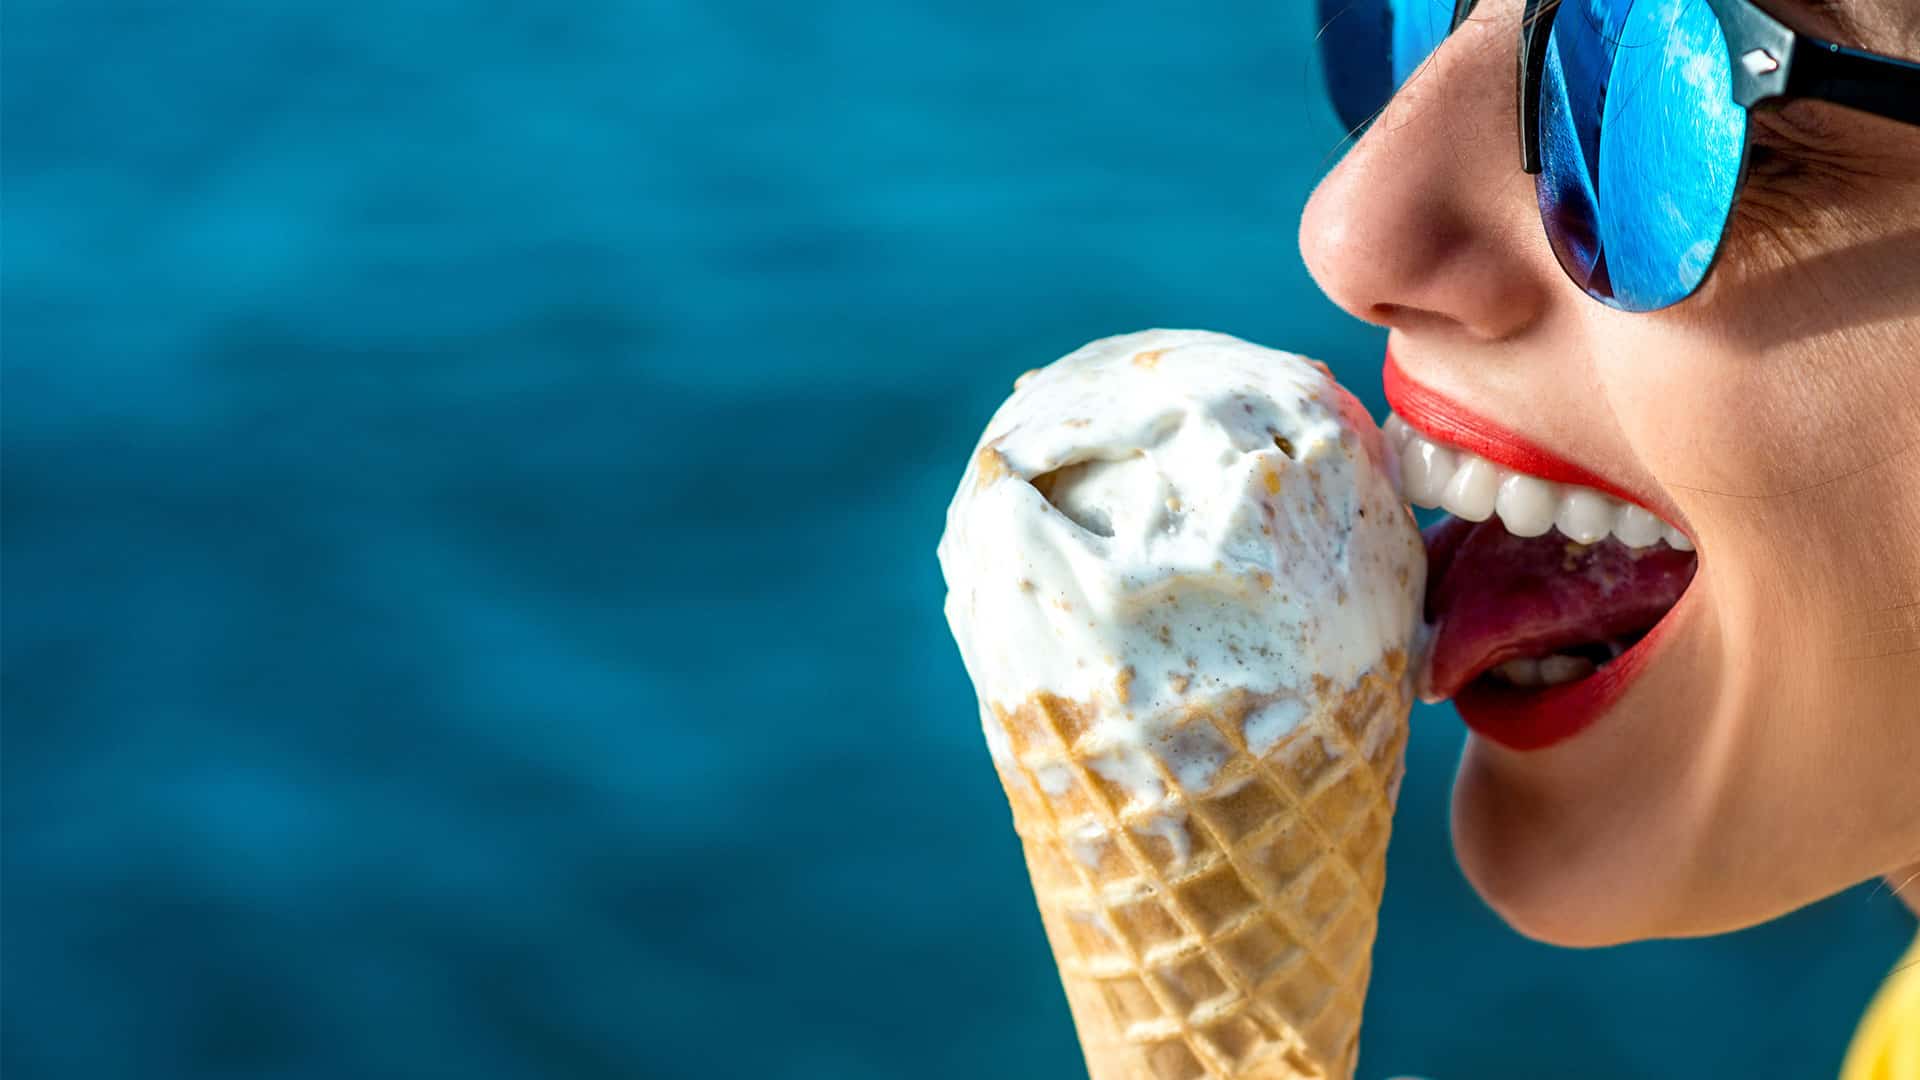 Вкусно ест мороженое. Девушка с мороженым. Ест мороженое. Девочка и мороженое. Мороженое реклама.